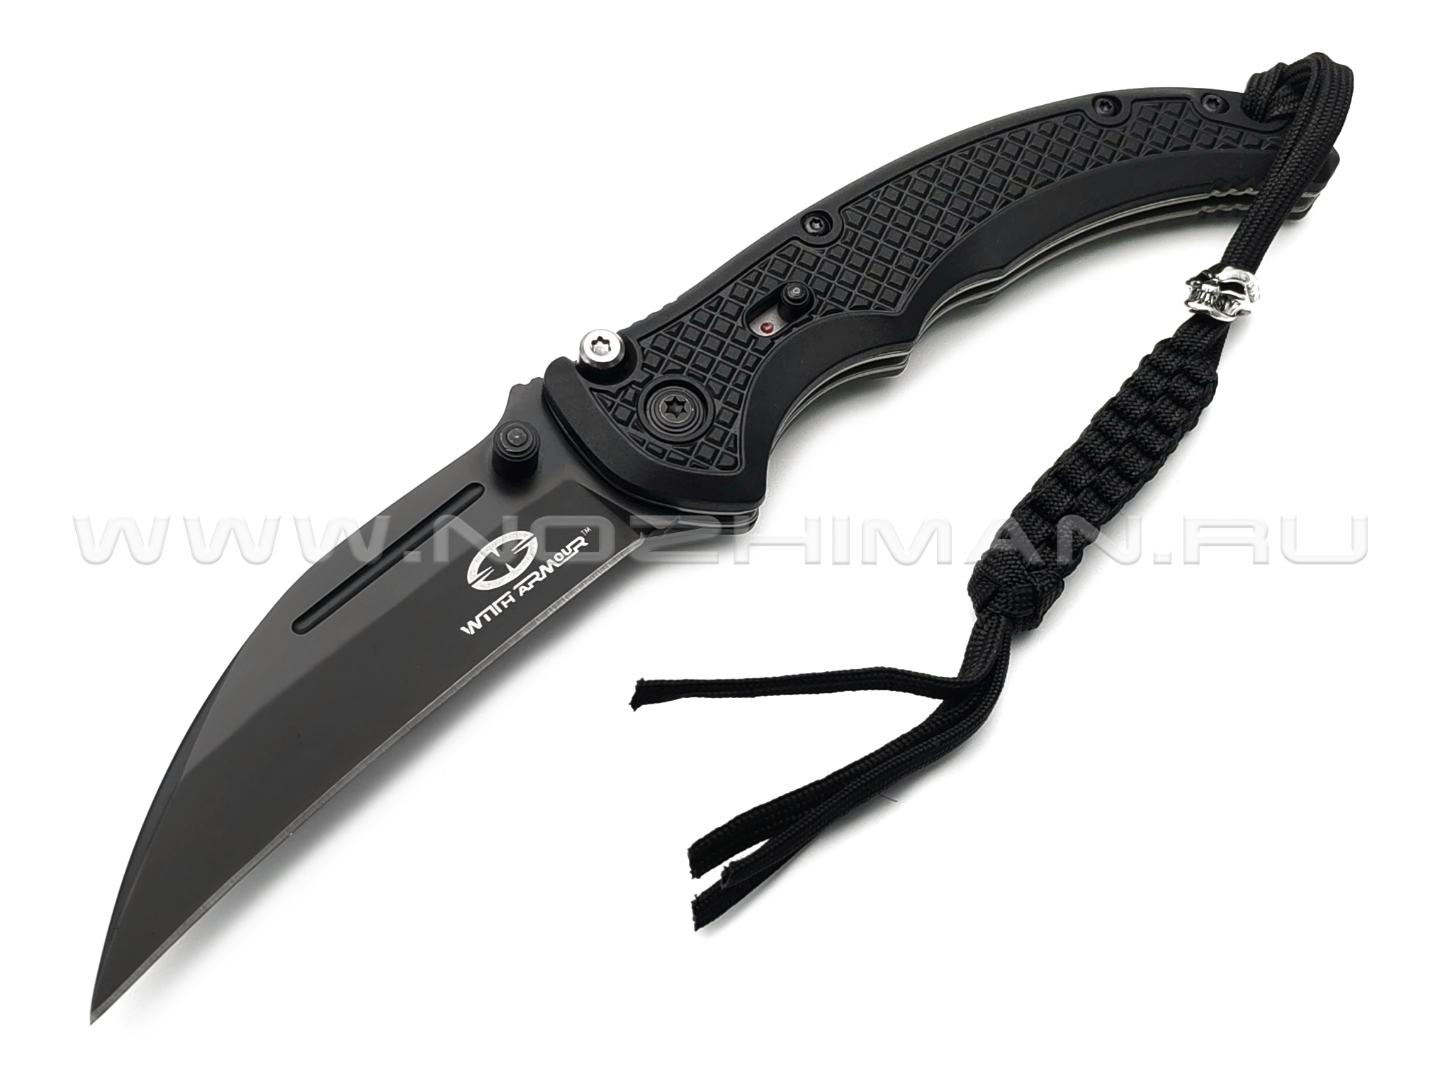 WithArmour складной нож Black Claw WA-075BK сталь 440C, рукоять Nylon fiber